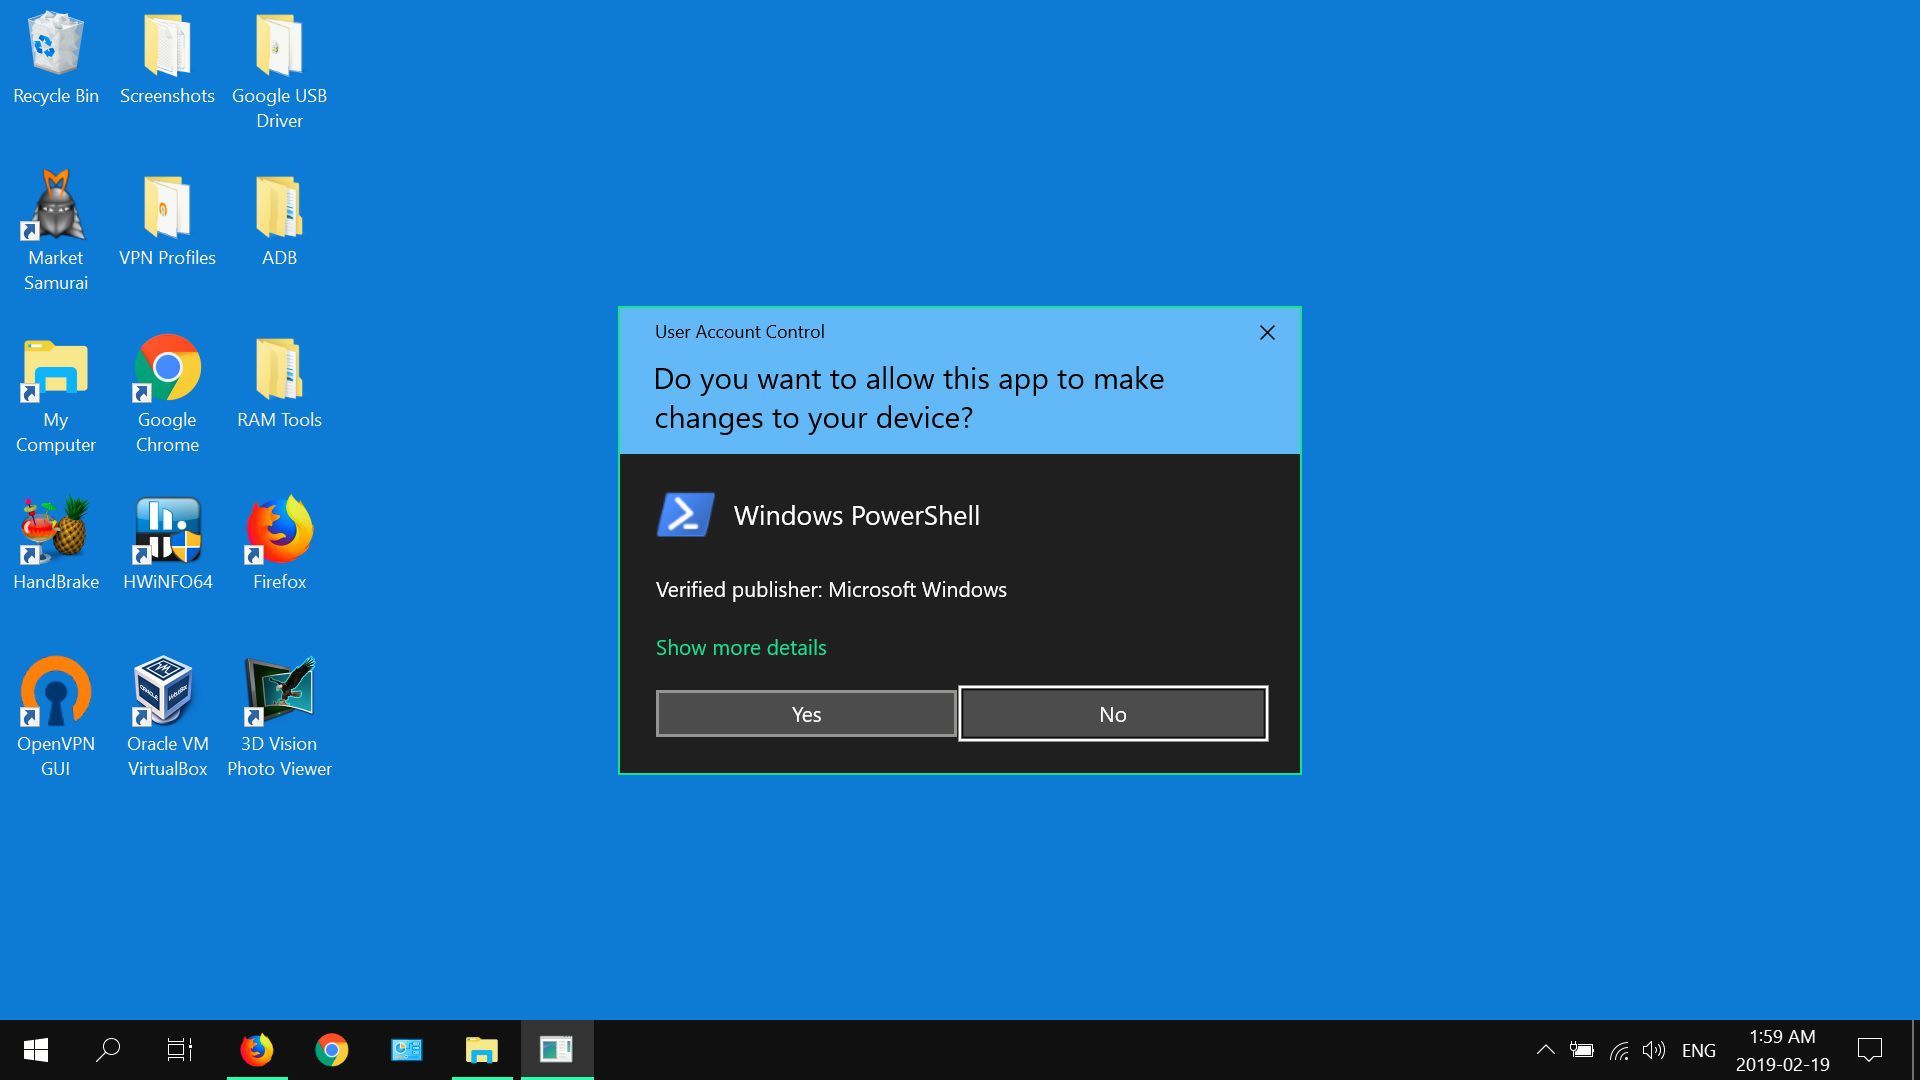 Скриншот диалогового окна UAC для Windows 10.